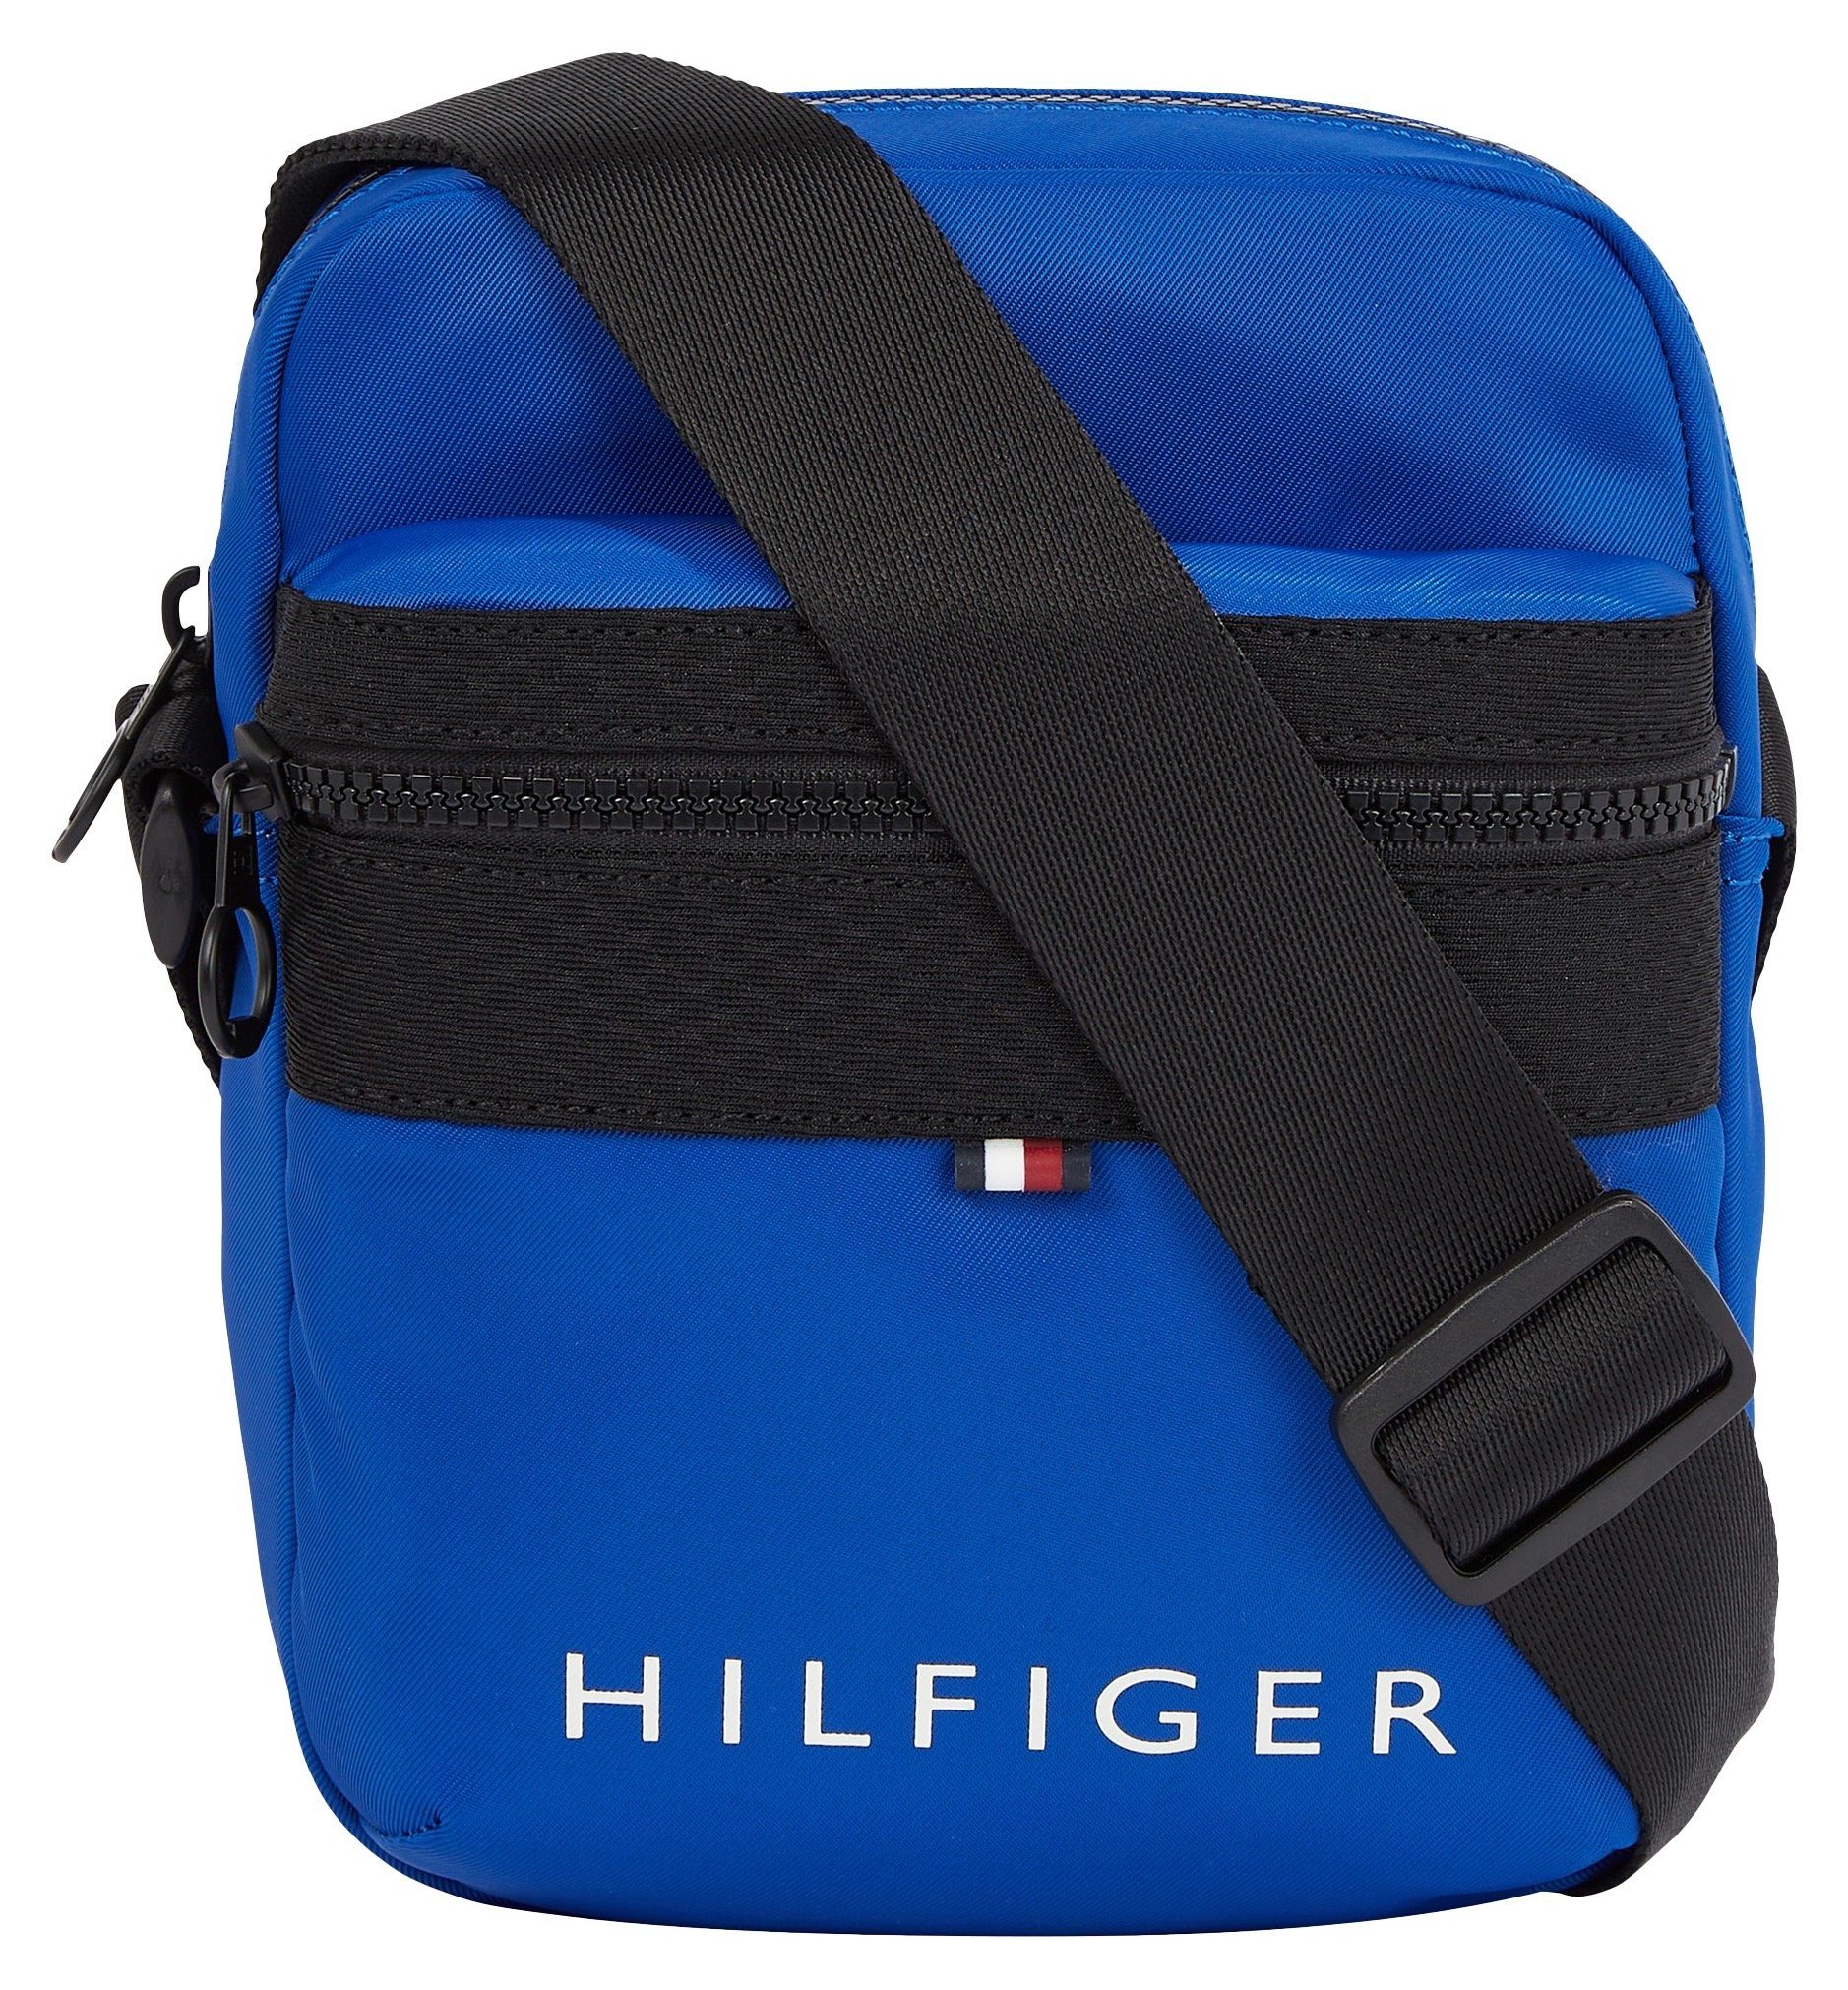 Tommy Hilfiger Mini Bag vorne mit Markenlogo REPORTER, SKYLINE royalblau TH MINI